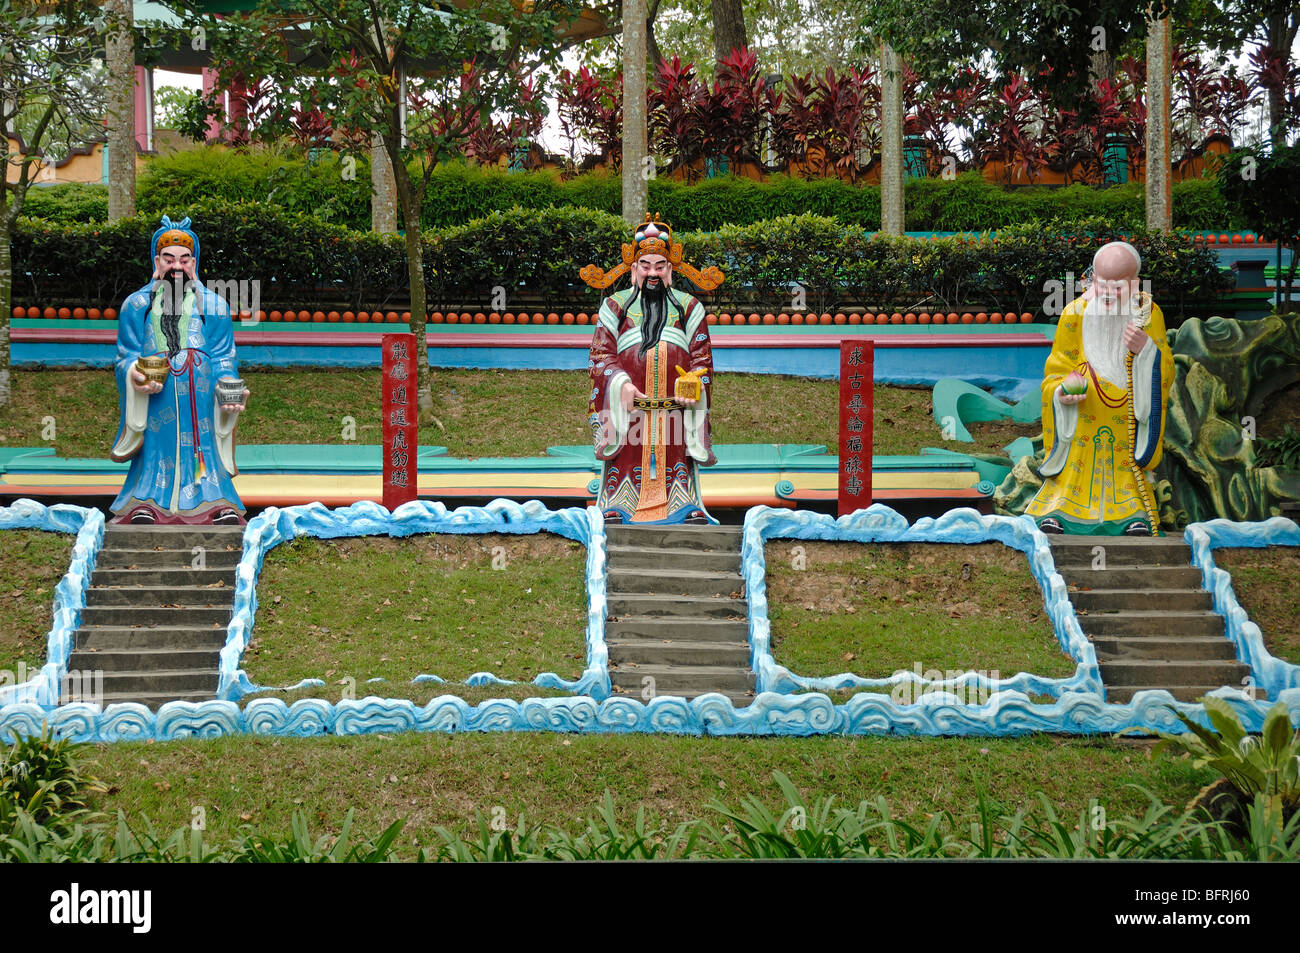 Sculptures or Statues of Fu, Lu & Shou, Chinese Gods or Deities of Good Fortune, Prosperity & Longevity, Tiger Balm Gardens Theme Park Singapore Stock Photo